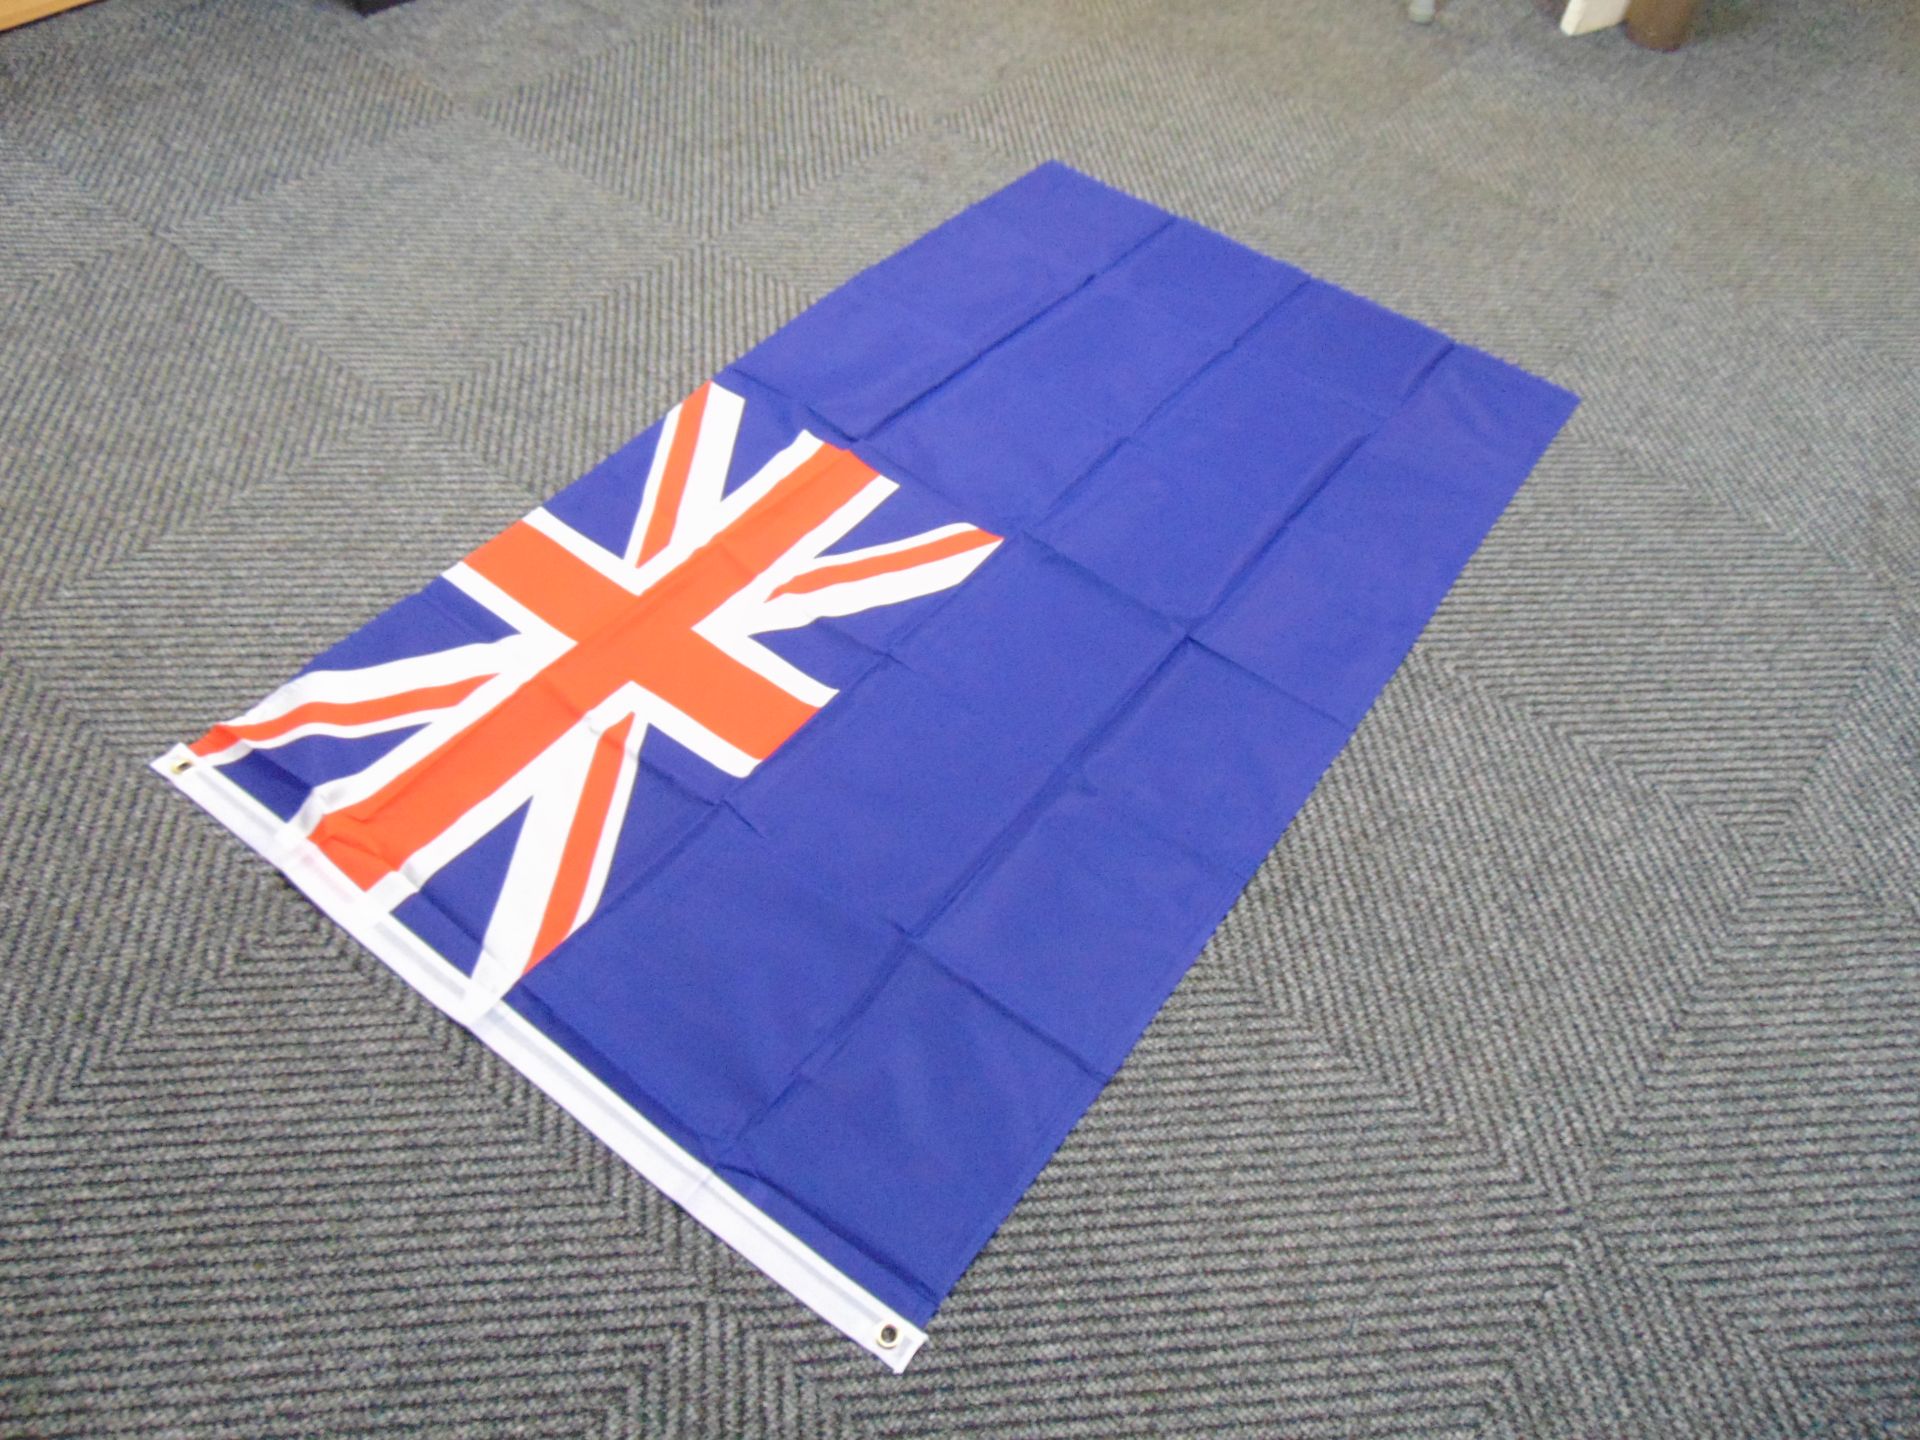 Blue Ensign Flag - 5ft x 3ft with Metal Eyelets. - Bild 6 aus 6